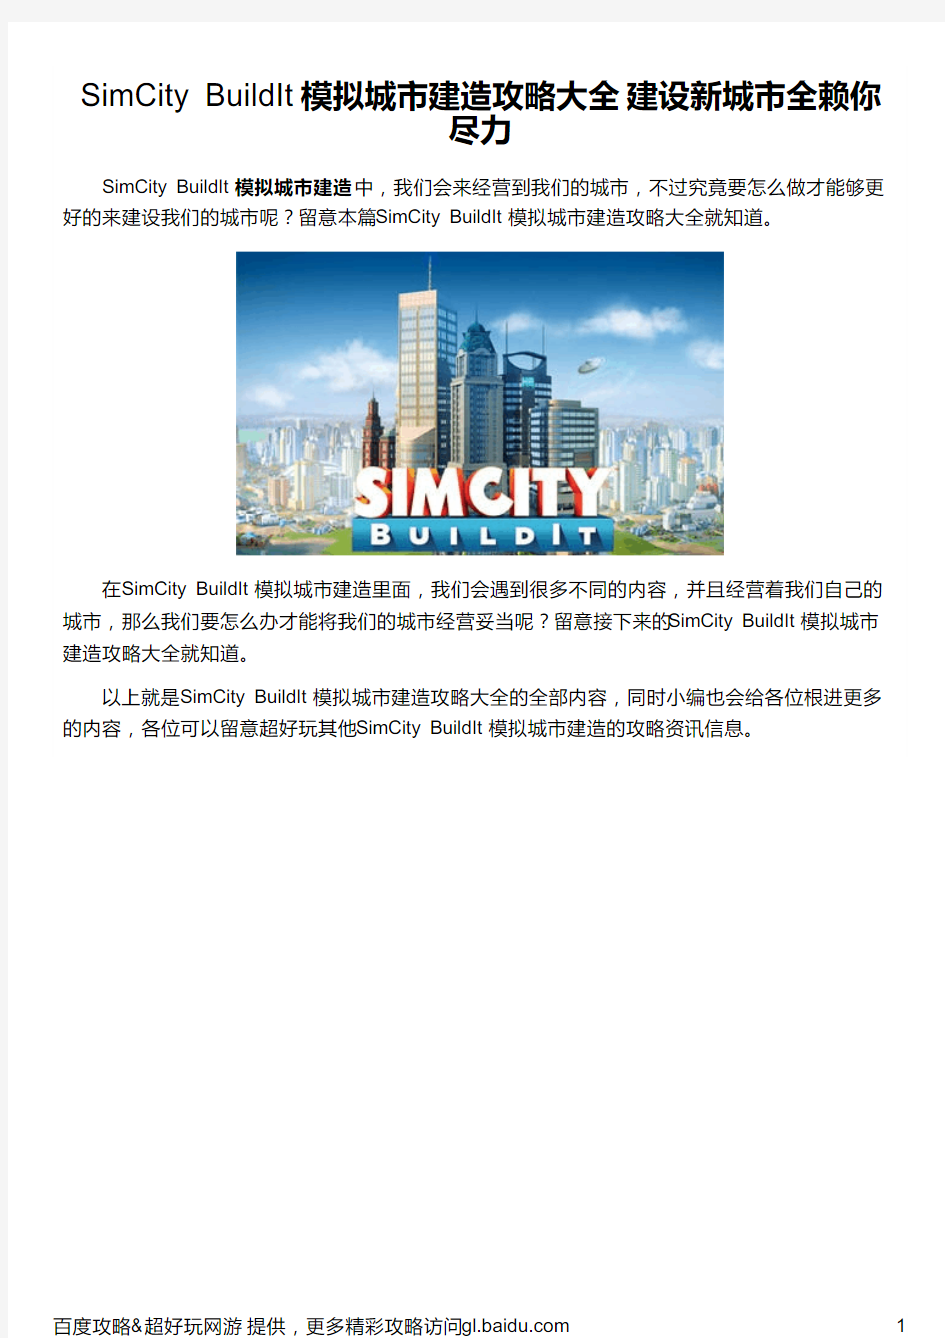 SimCity BuildIt 模拟城市建造攻略大全 建设新城市全赖你尽力